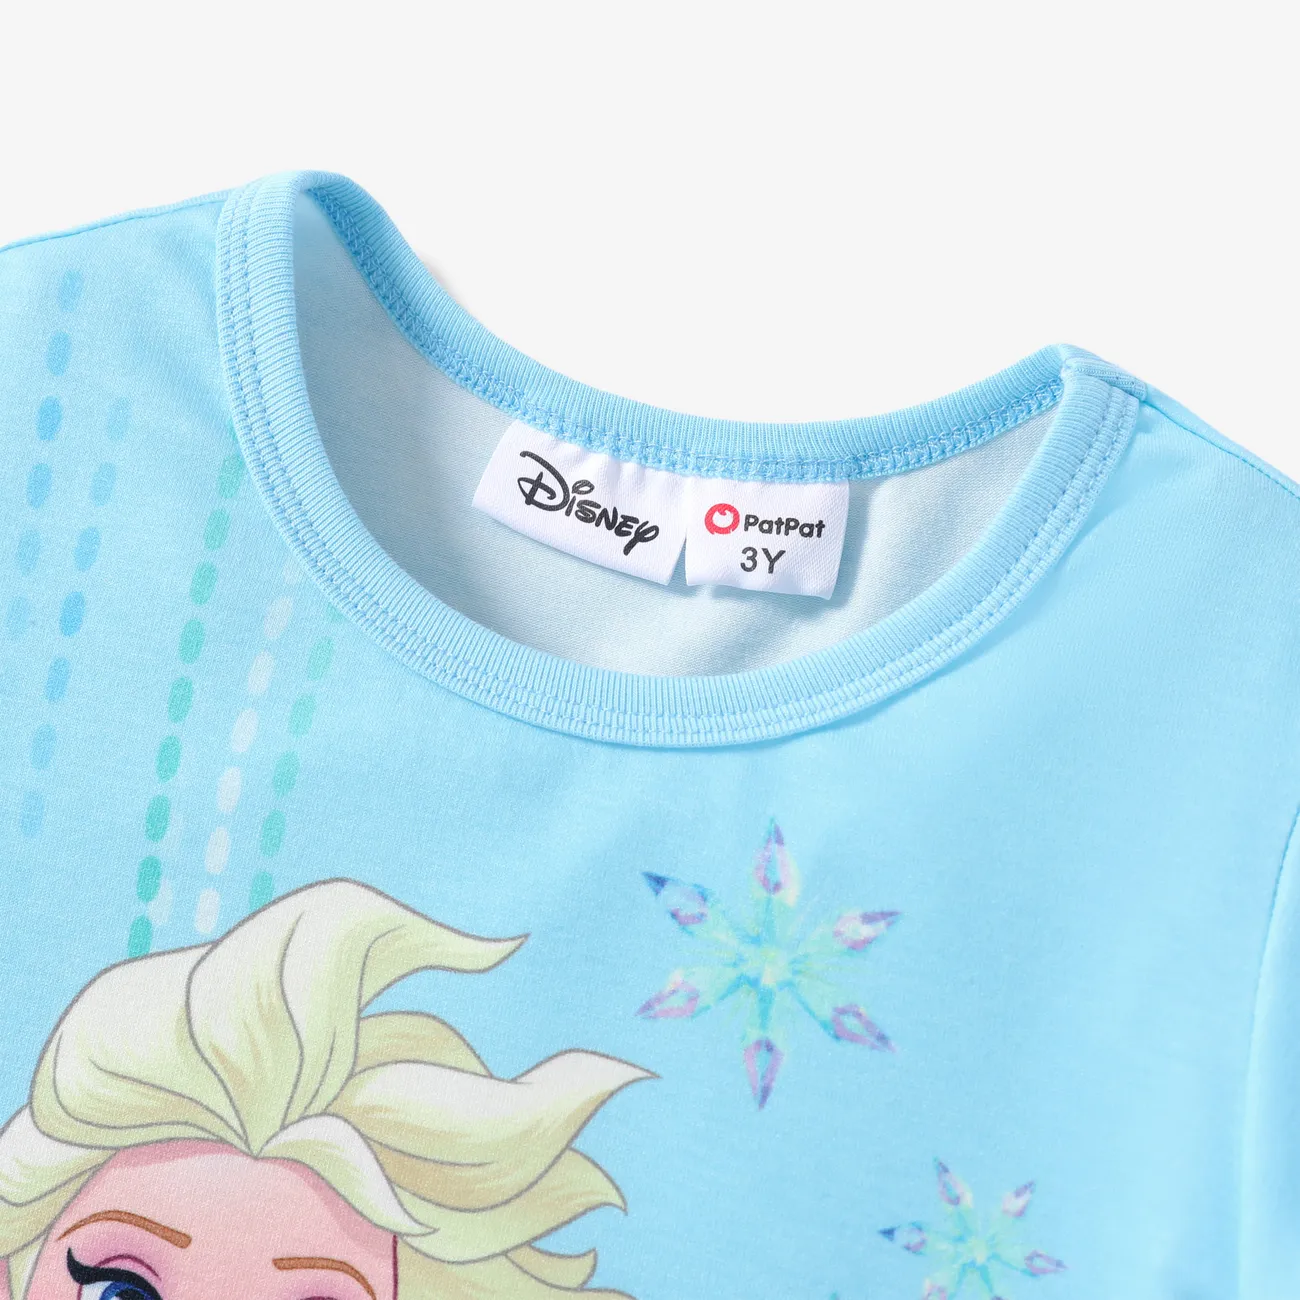 Disney Frozen Niño pequeño Chica Hipertáctil Infantil Manga corta Camiseta Azul big image 1